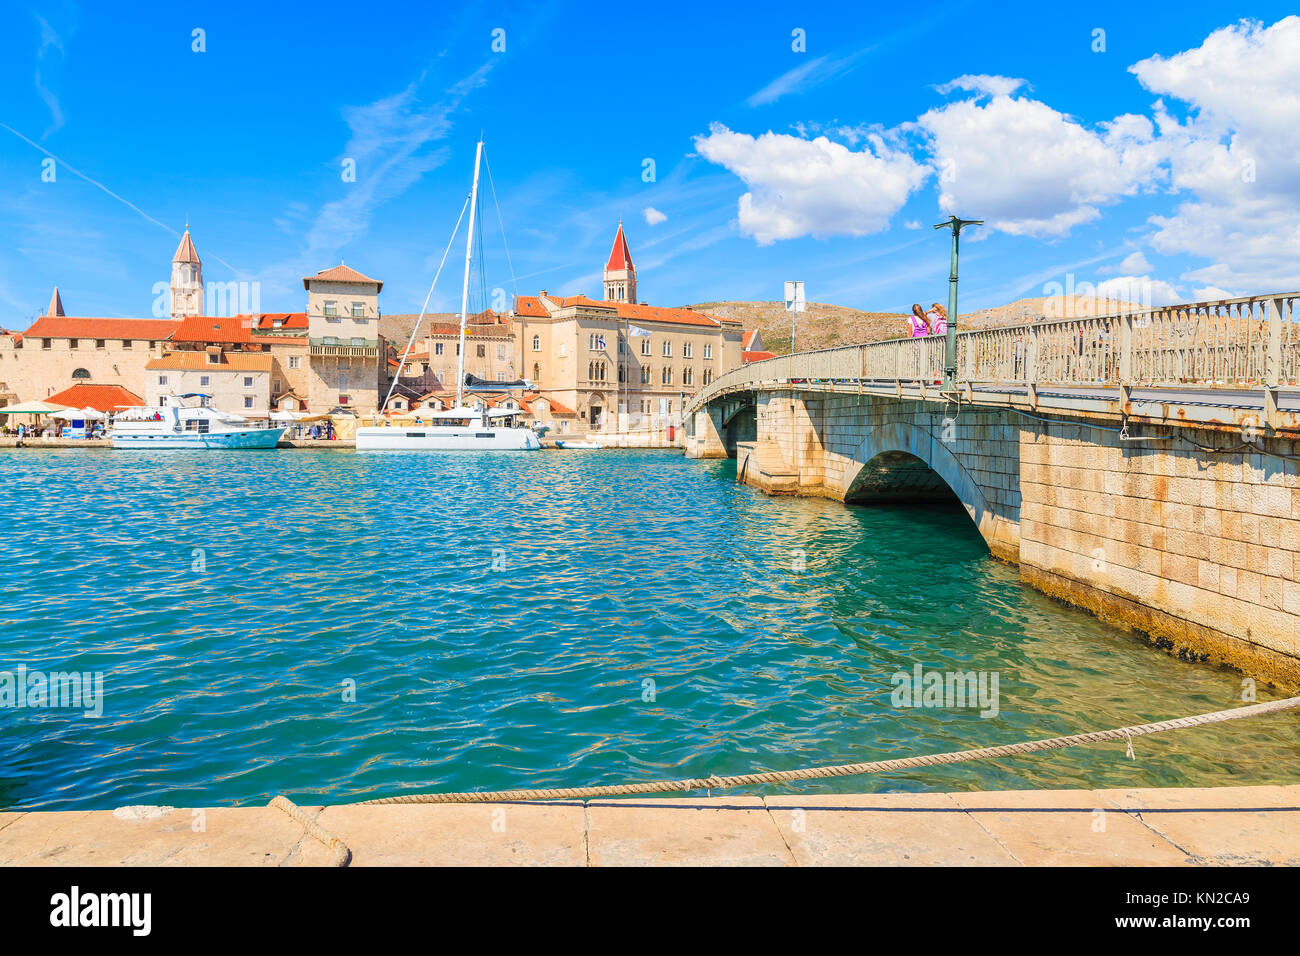 View of historic buildings in Trogir town and bridge over canal, Dalmatia, Croatia Stock Photo